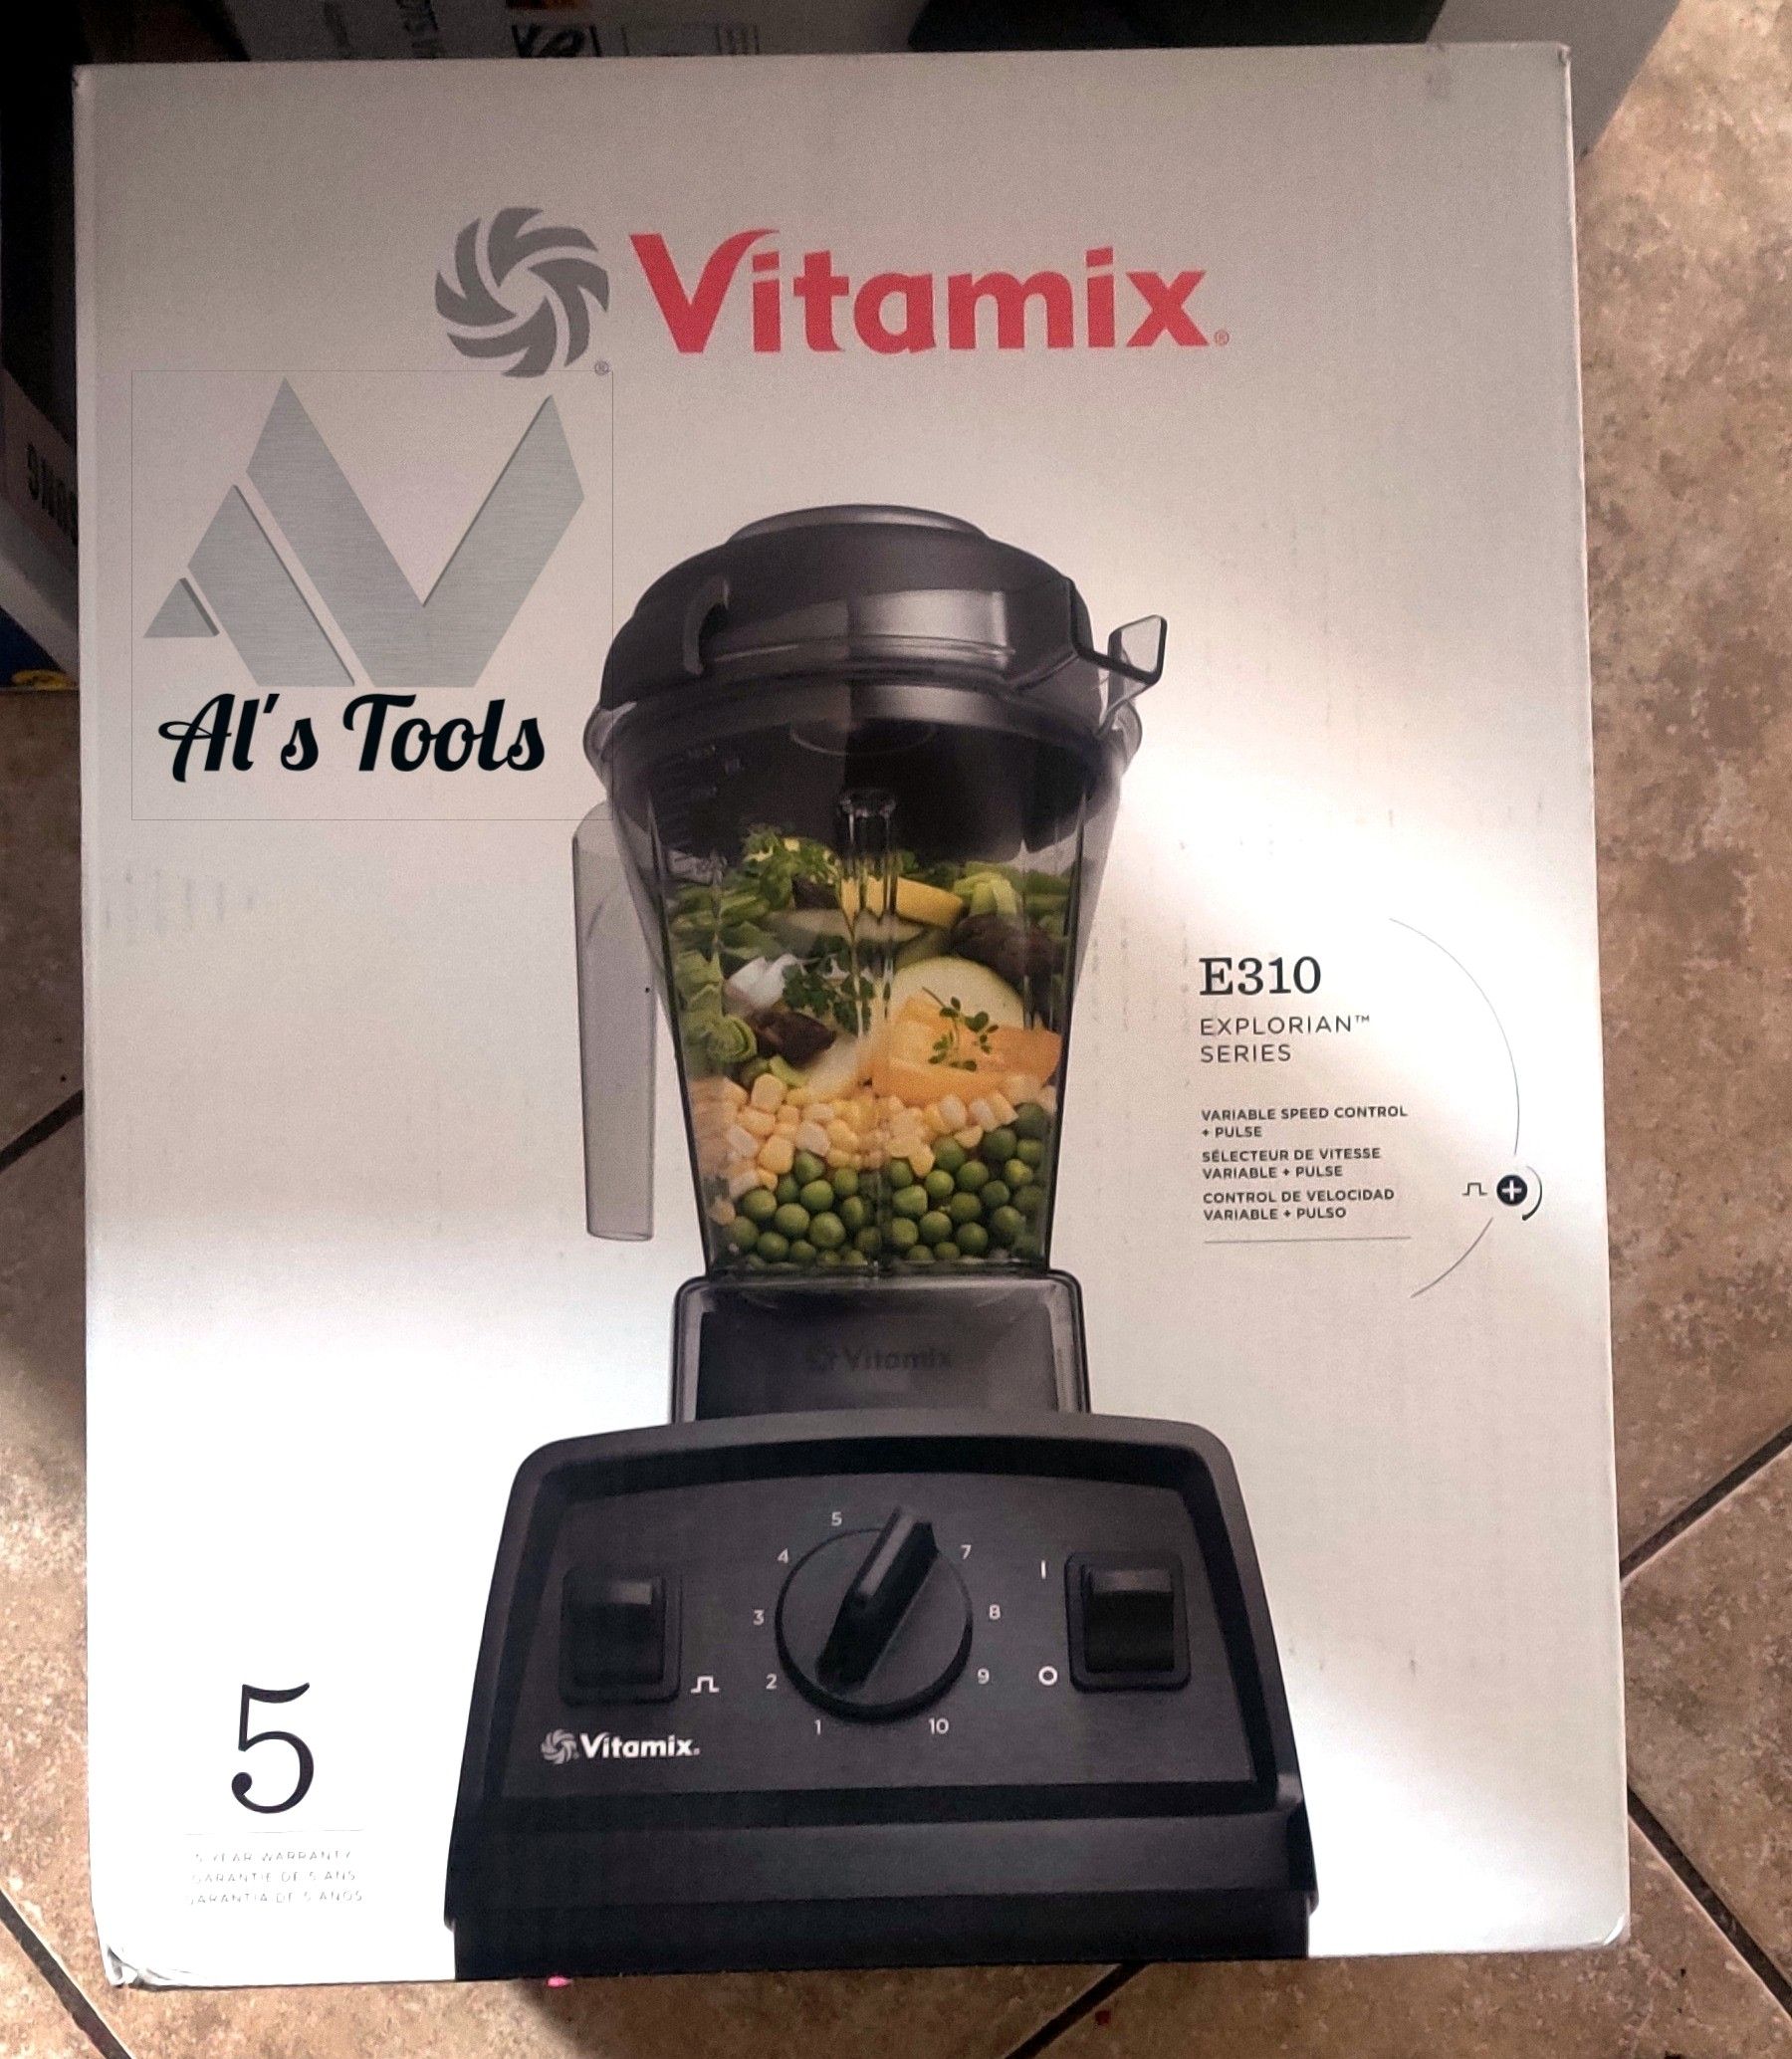 Vitamix e310 explorian series high performance blender